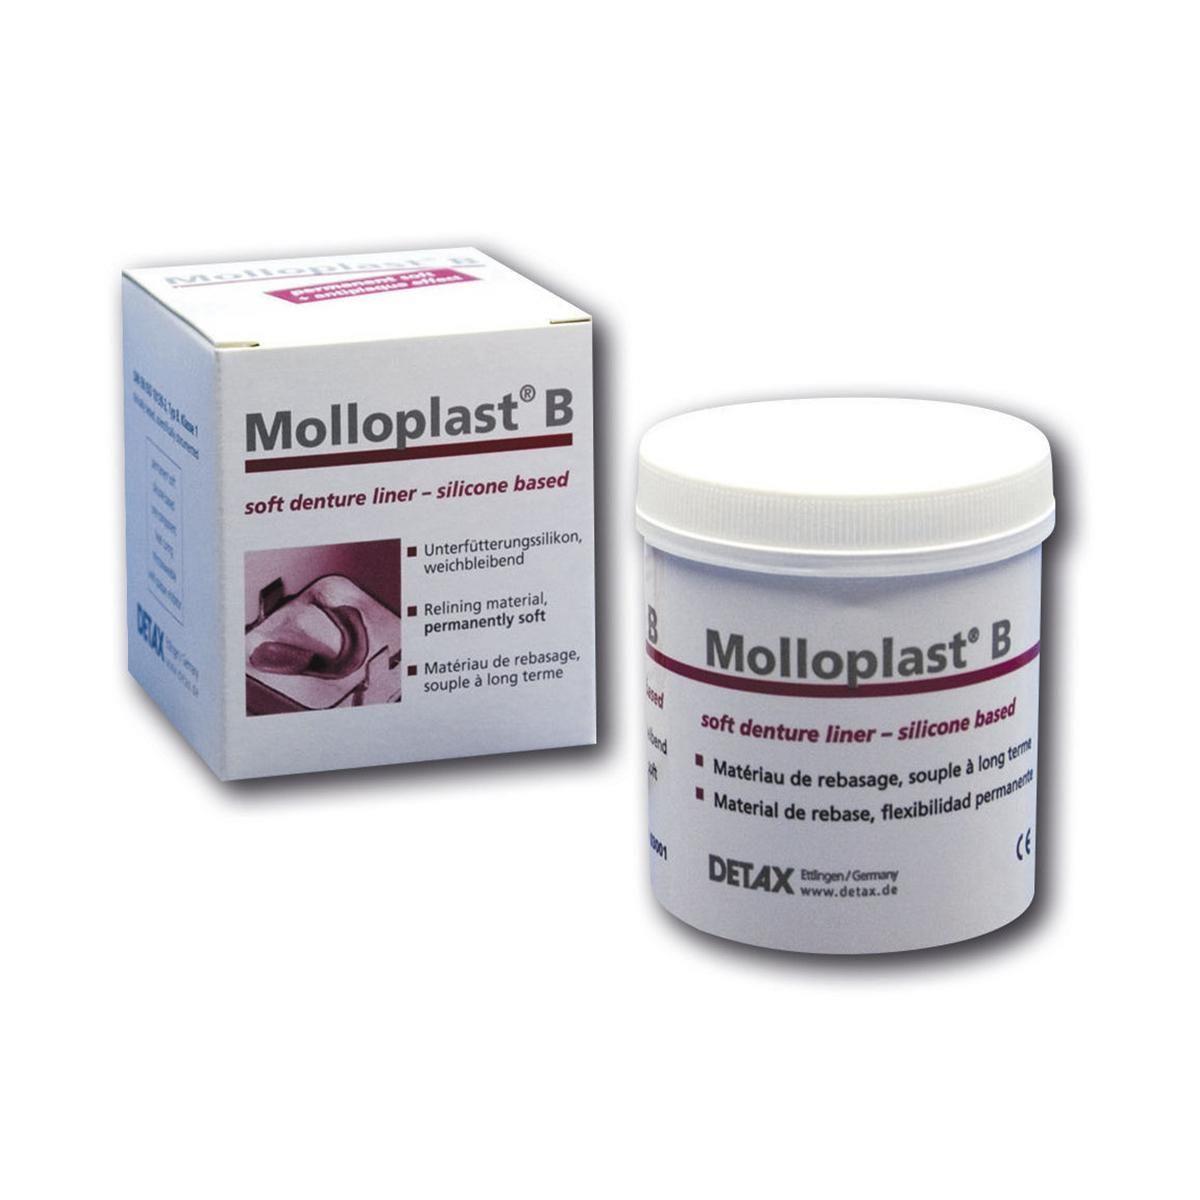 DentrealStore - Detax Molloplast B Permanent soft relining material 45g